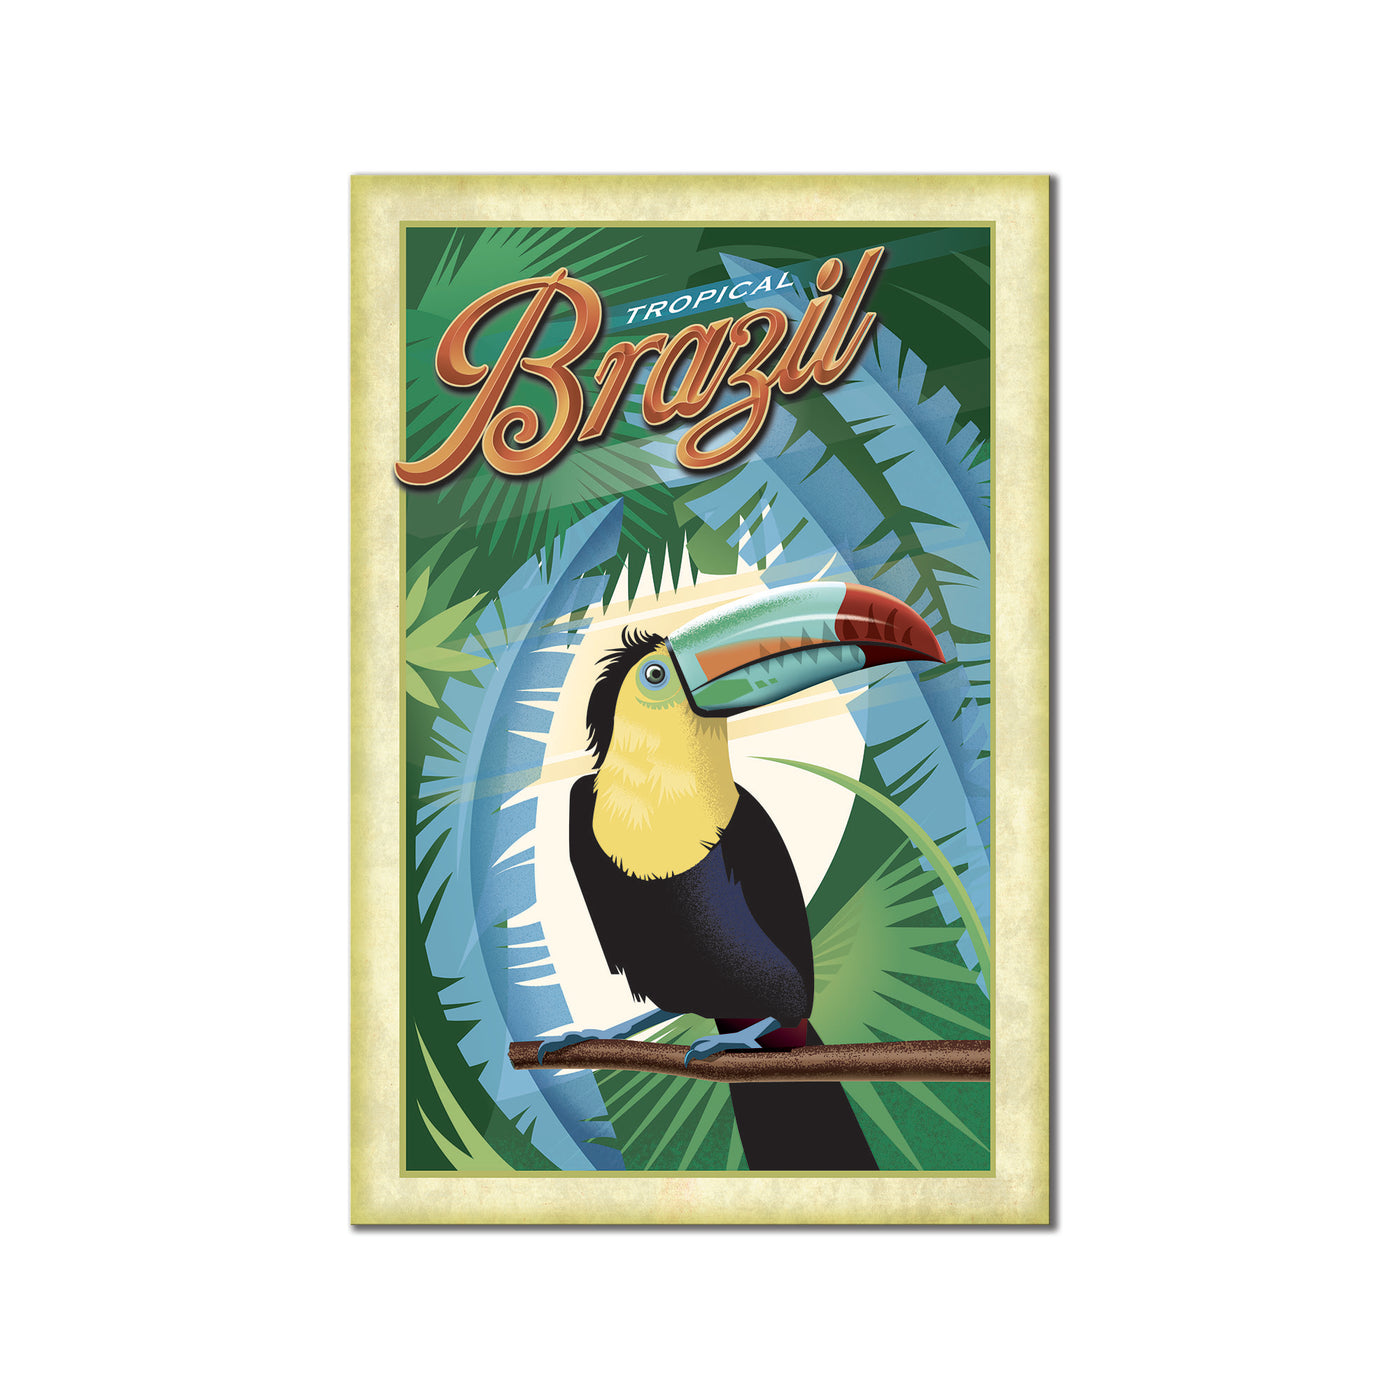 Tropical - Brazil